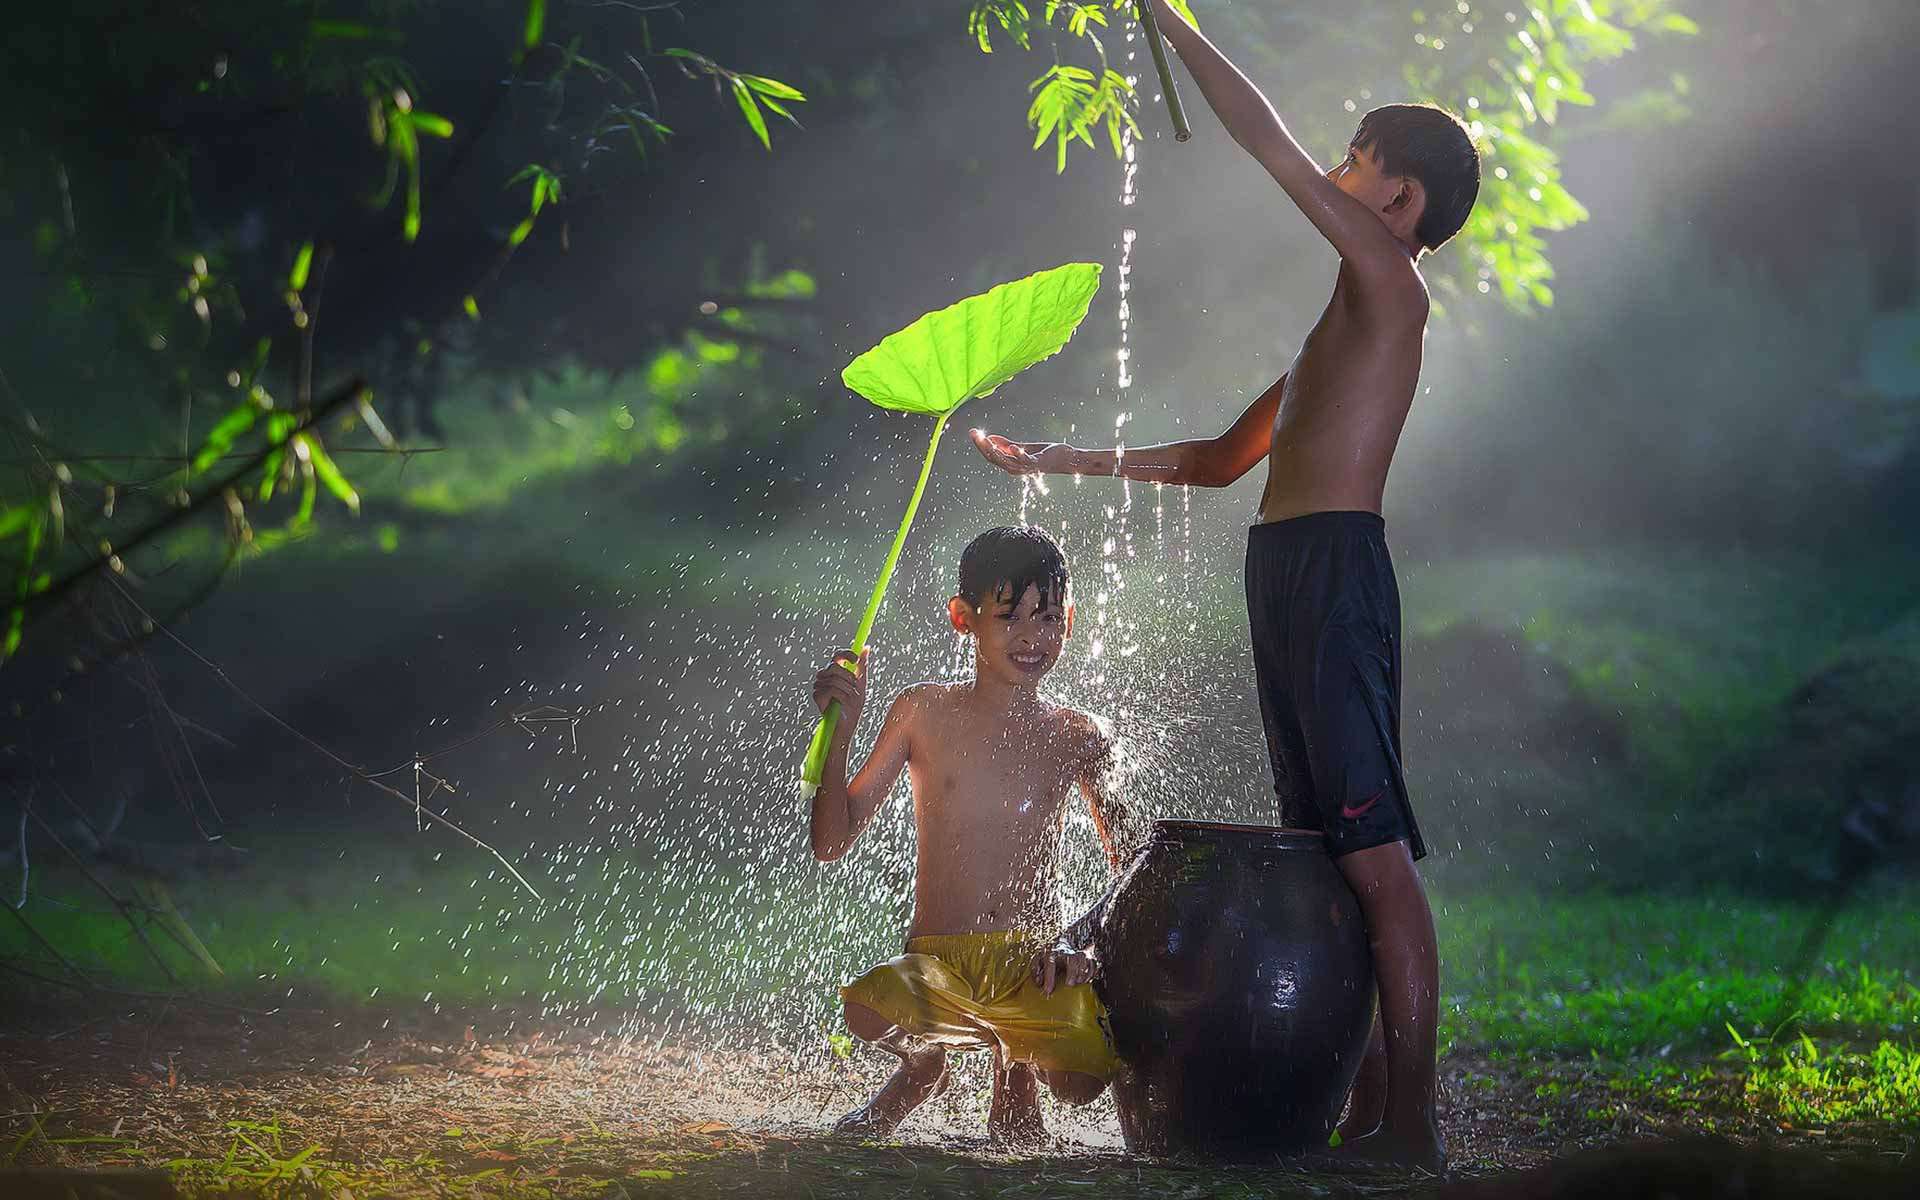 Countryside of Vietnam - Unforgettable Childhood